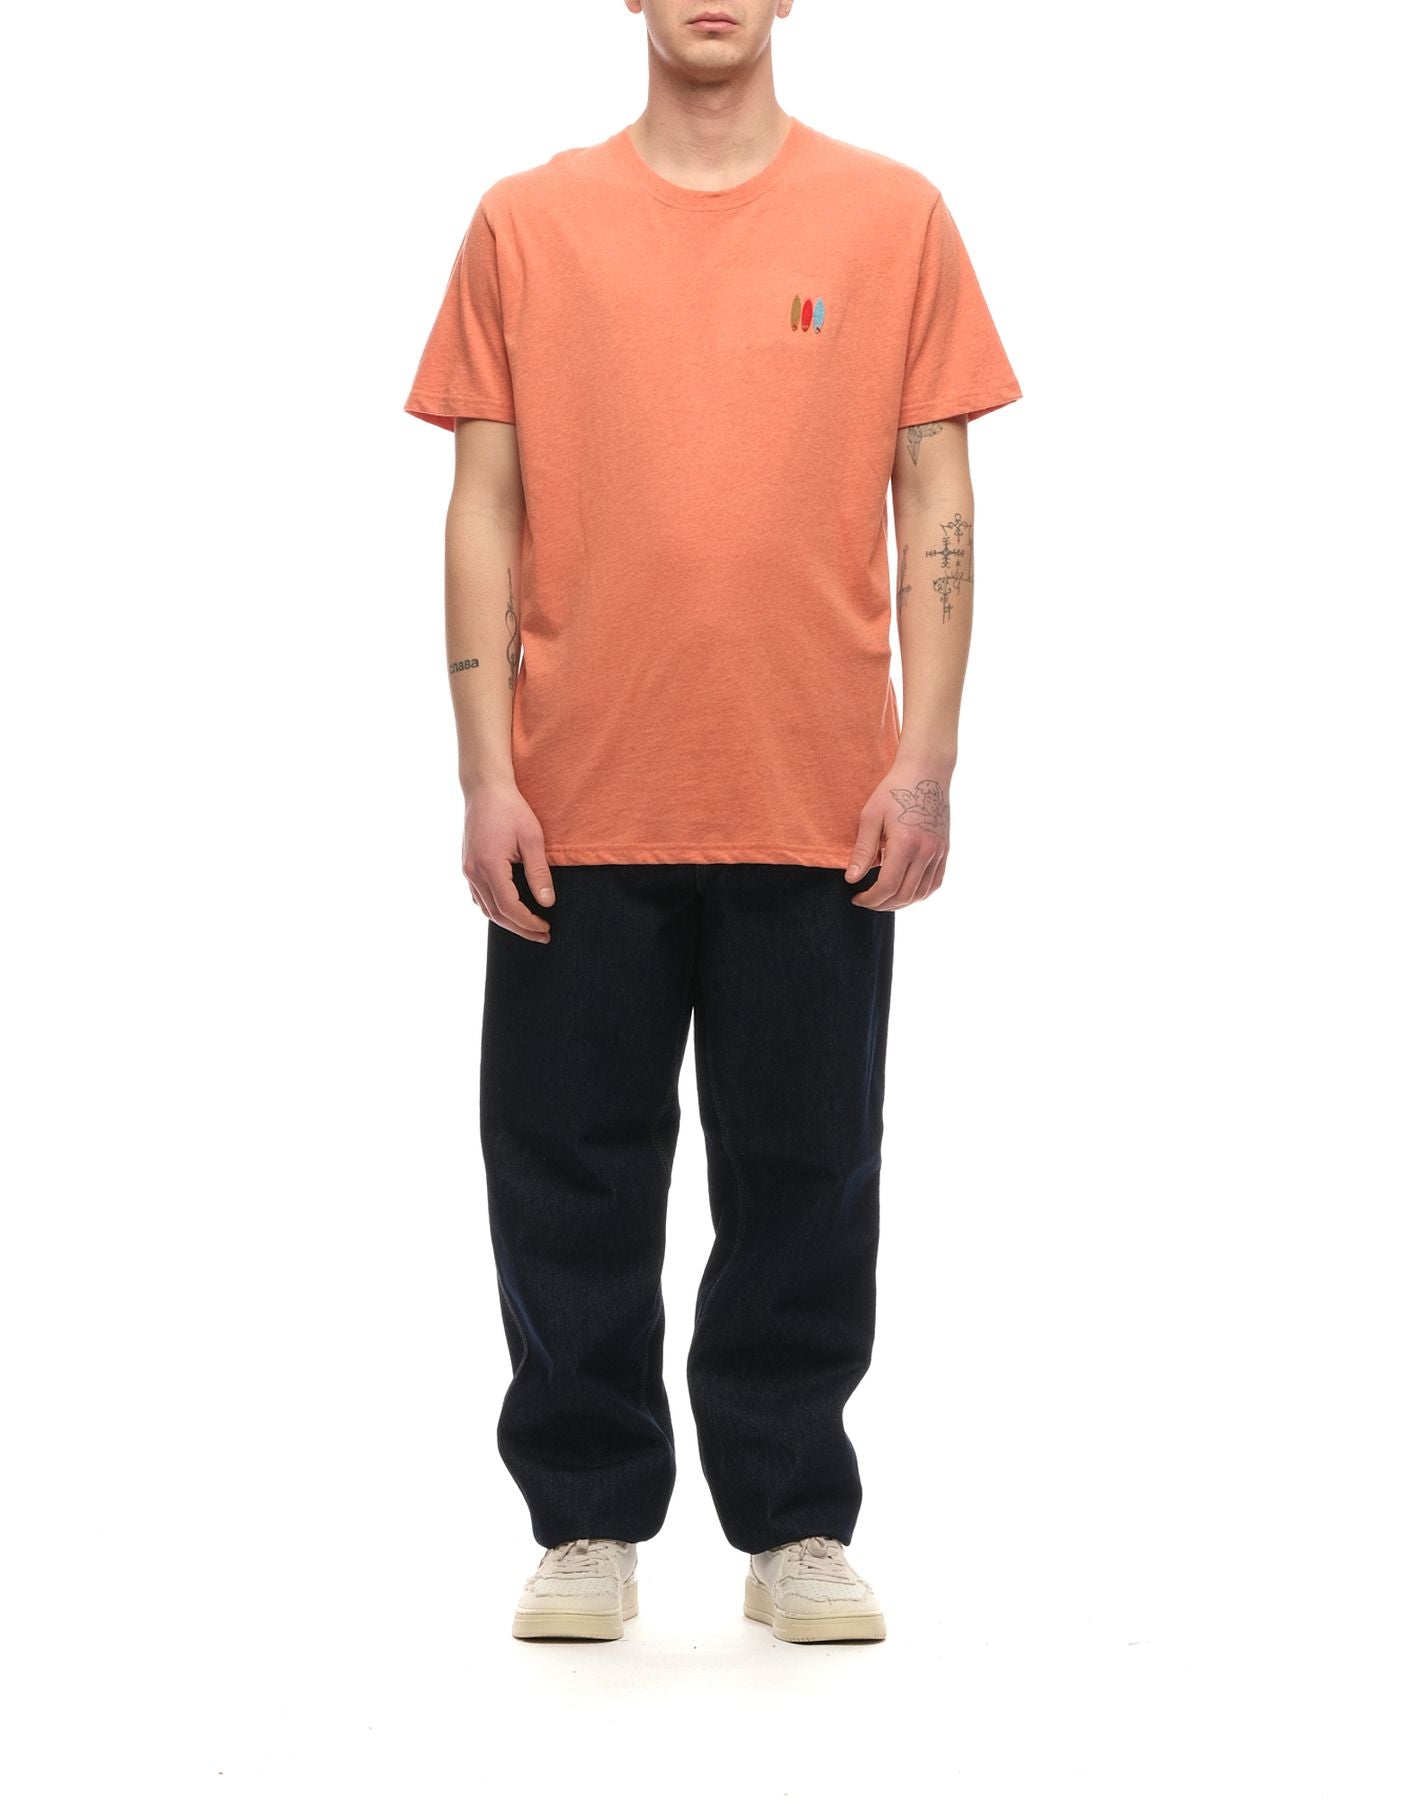 Camiseta para el hombre 1316 naranja Revolution